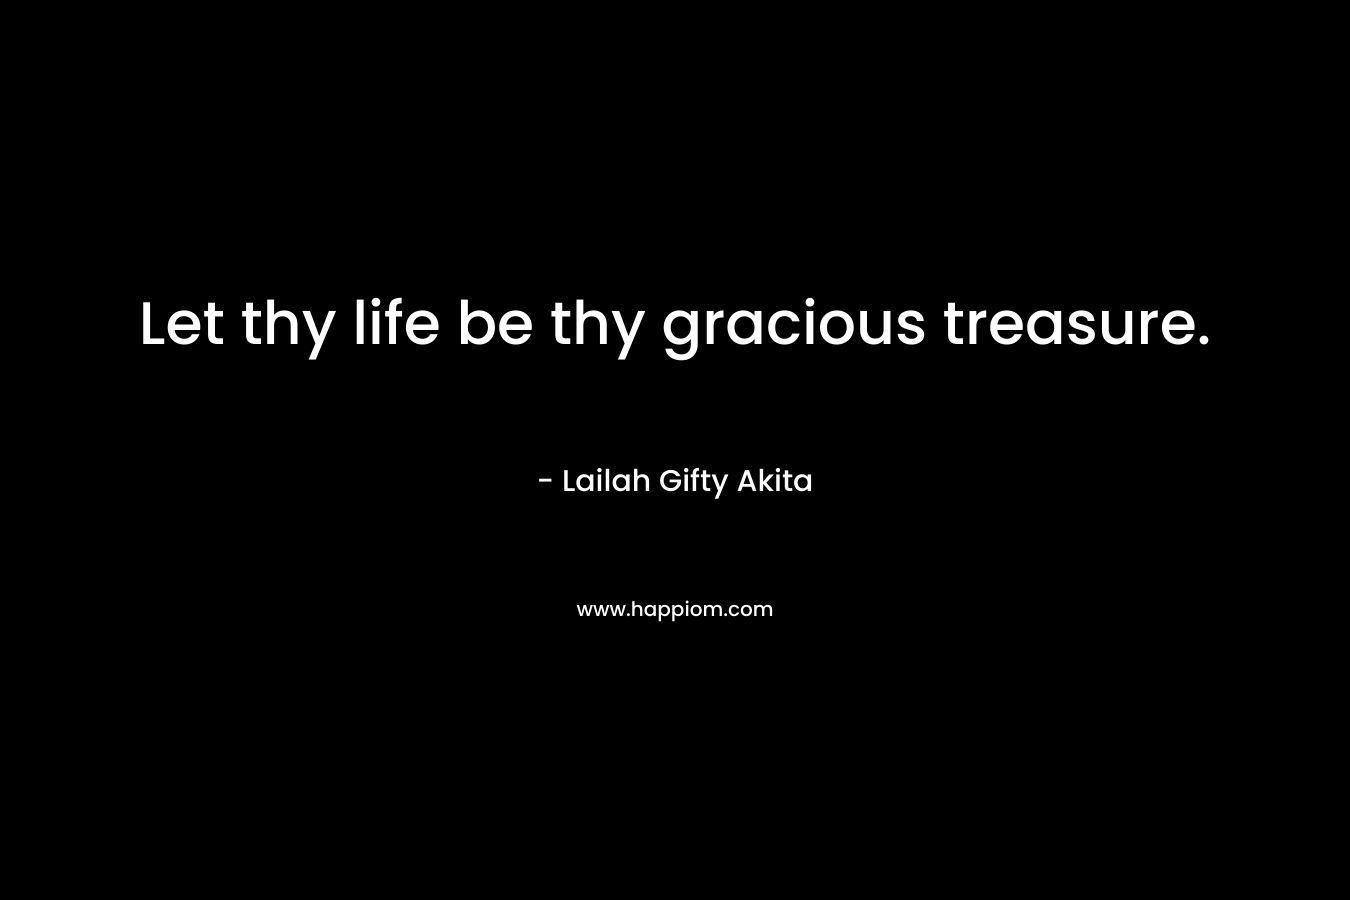 Let thy life be thy gracious treasure.